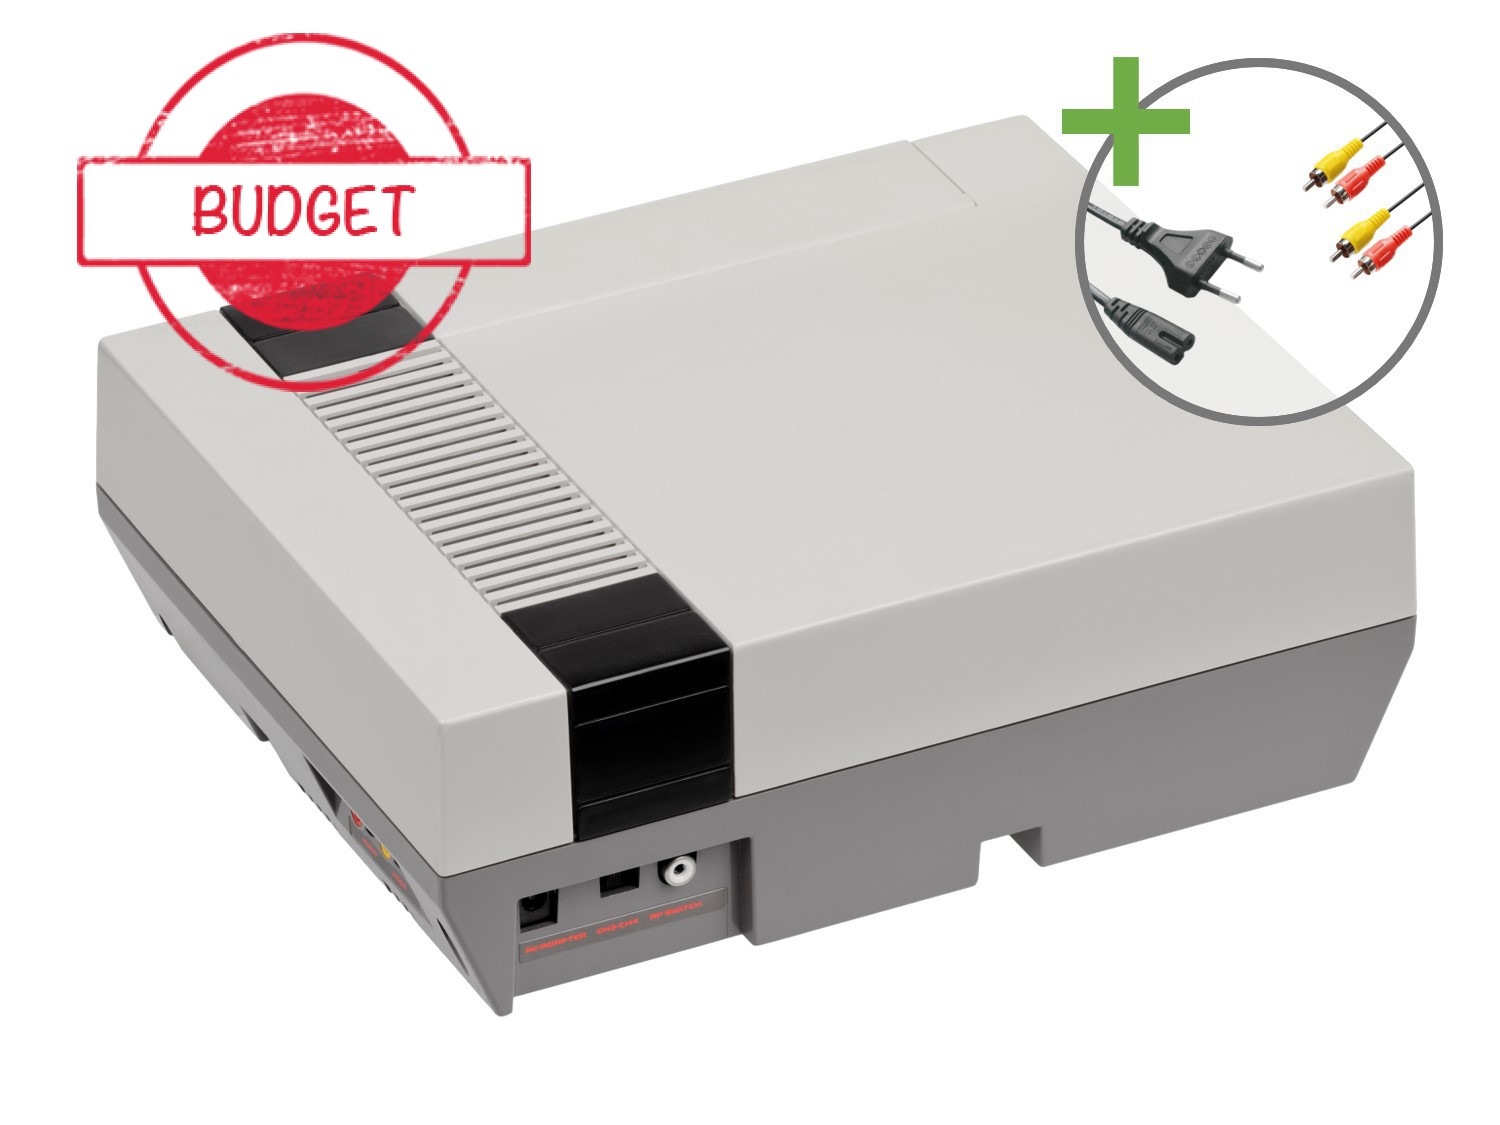 Nintendo NES Starter Pack - Control Deck Edition - Budget - Nintendo NES Hardware - 3